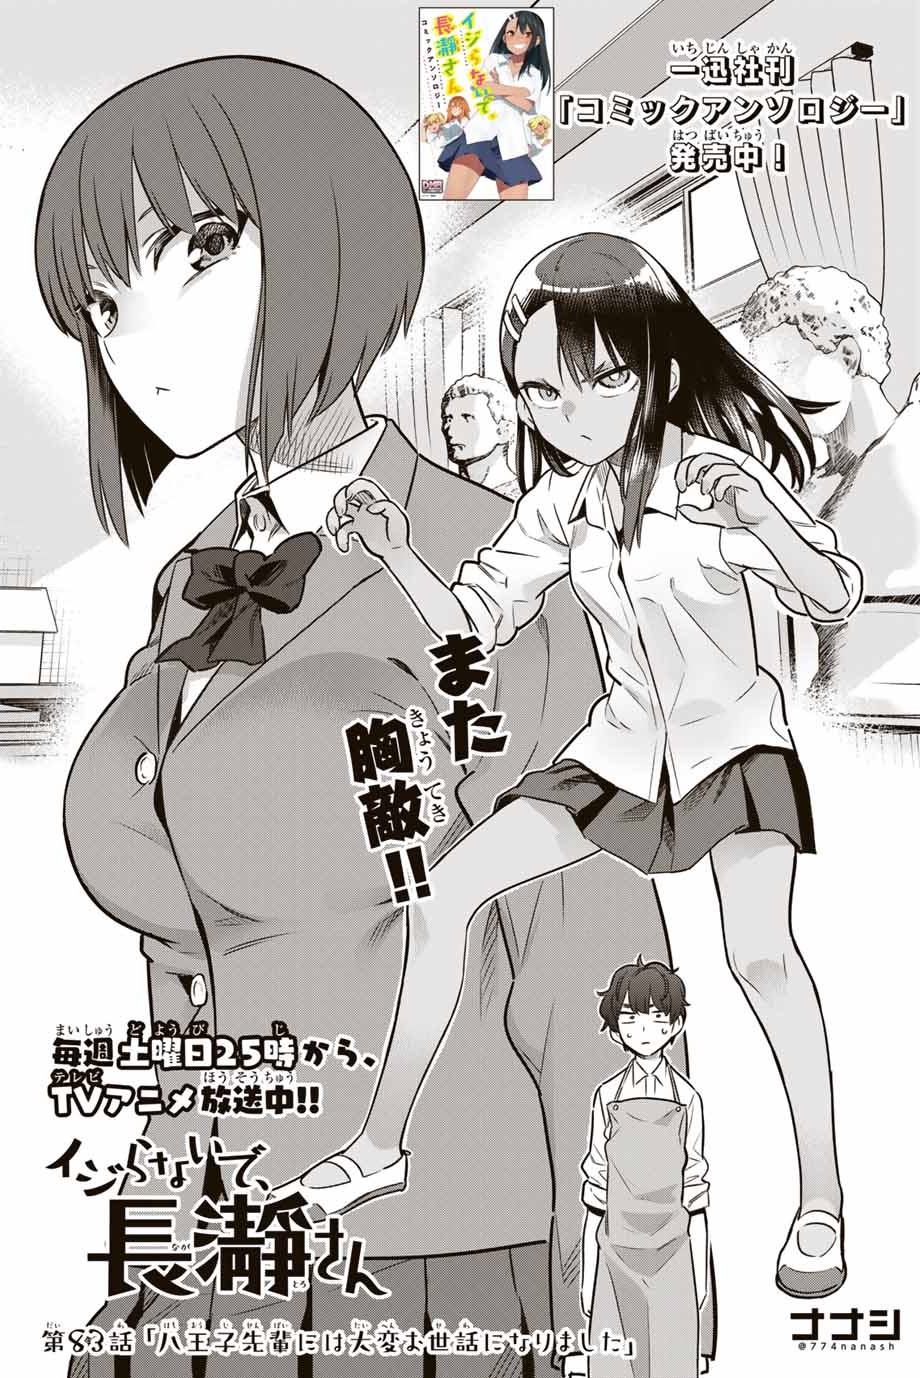 Is Nagatoro really in love with senpai (Don't Toy with Me, Miss Nagatoro  manga/anime)? - Quora